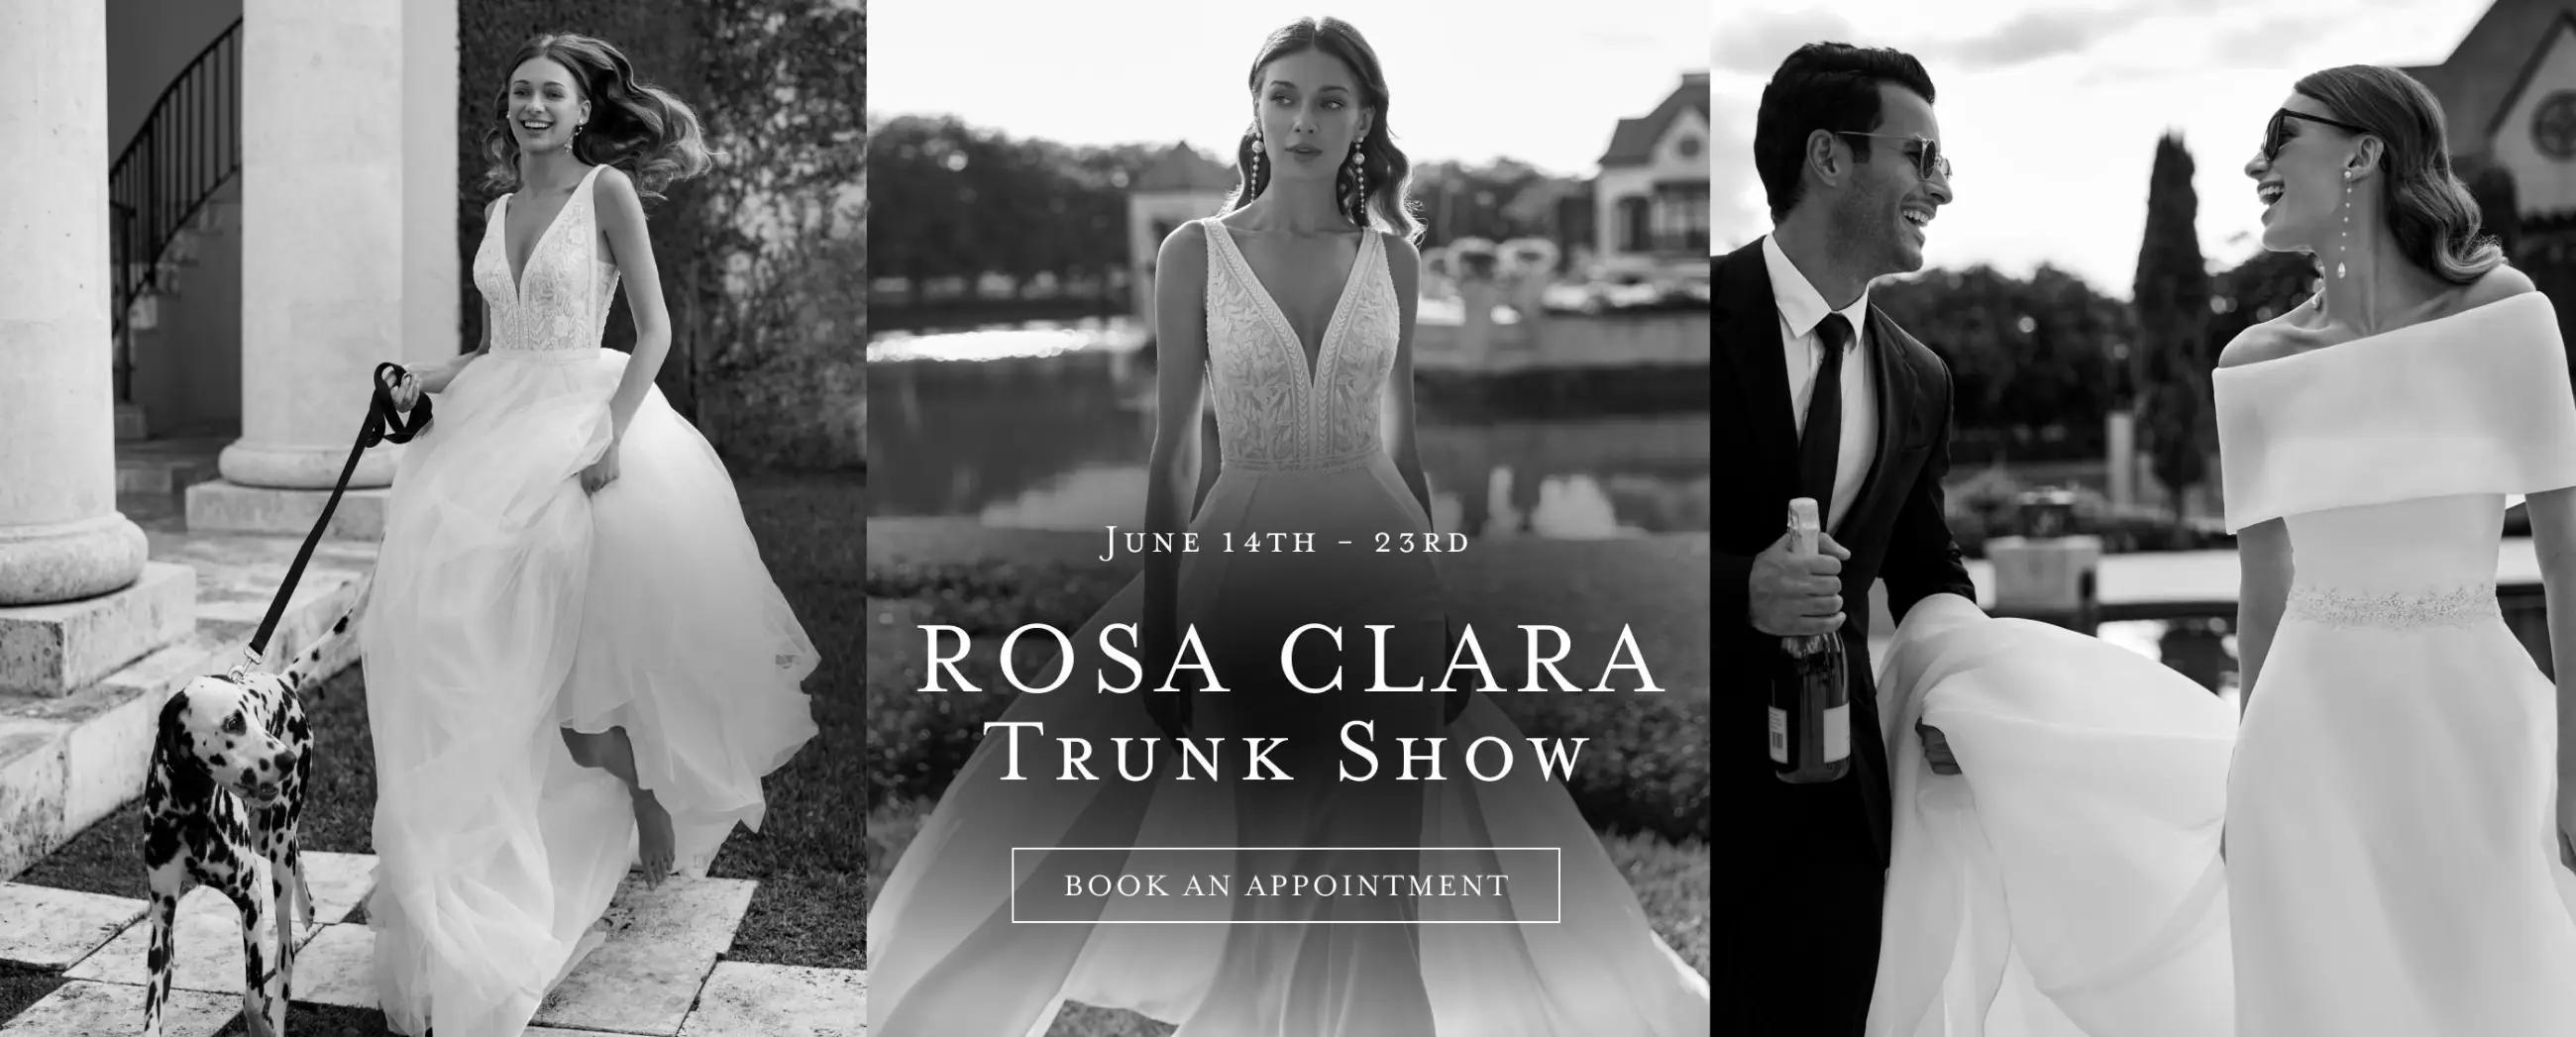 Rosa Clara trunk show at Bella Bridal Gallery